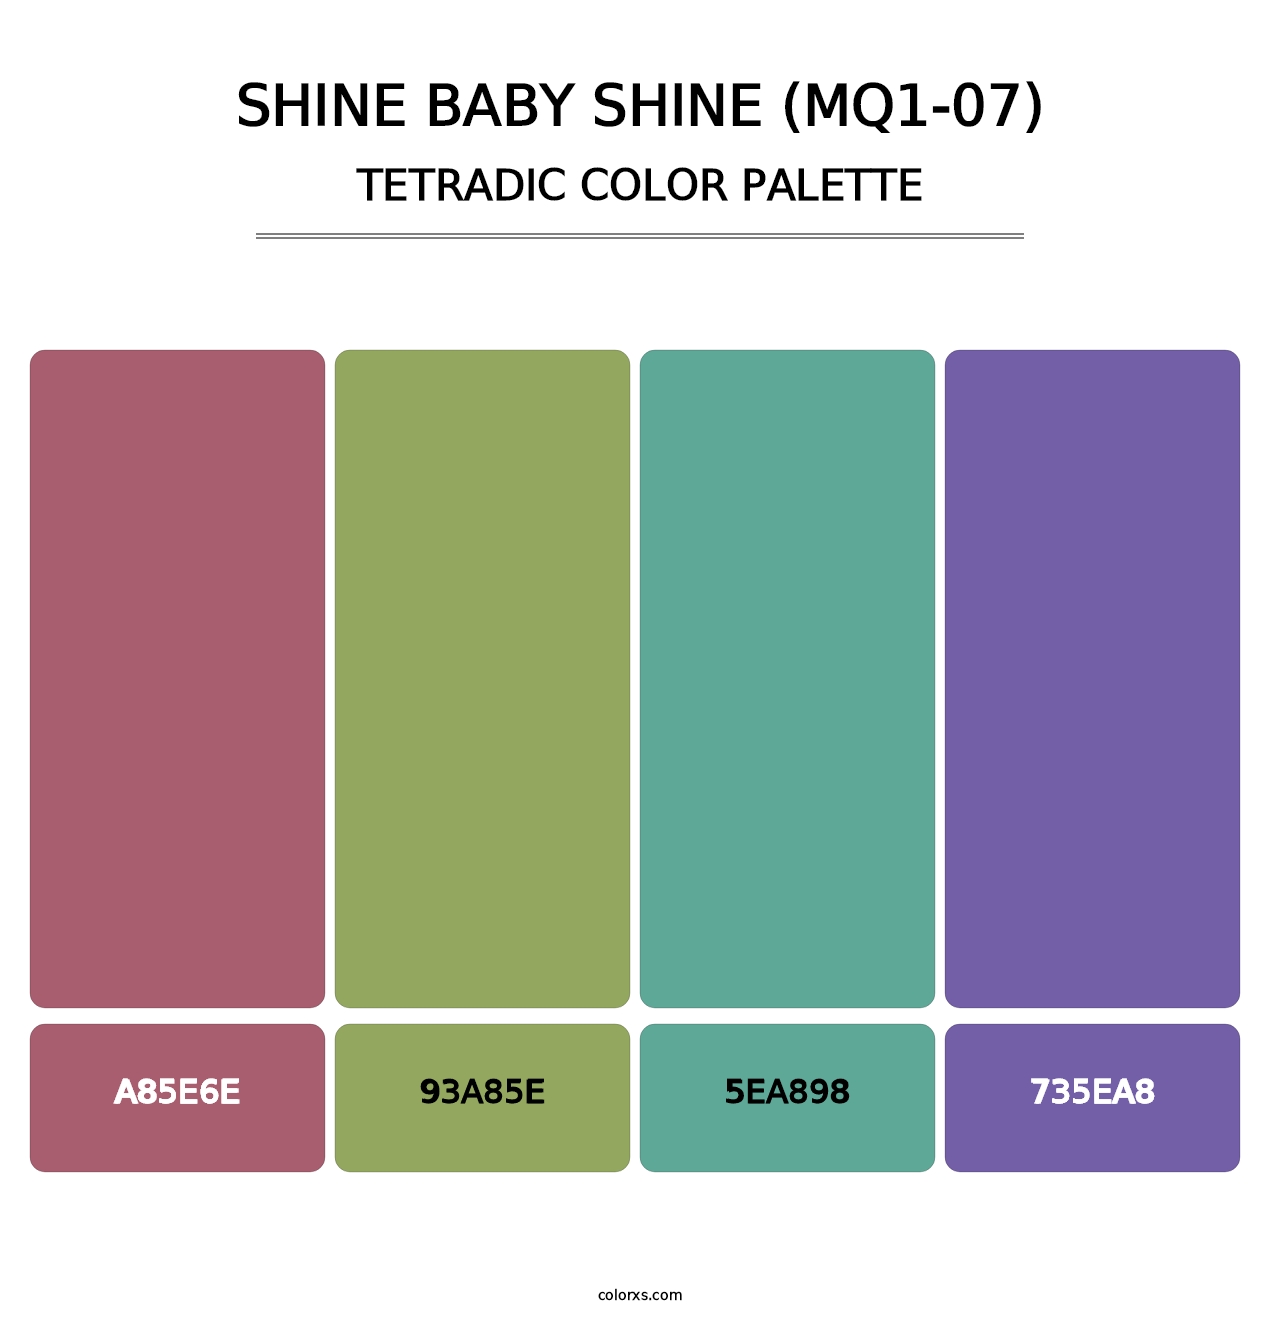 Shine Baby Shine (MQ1-07) - Tetradic Color Palette